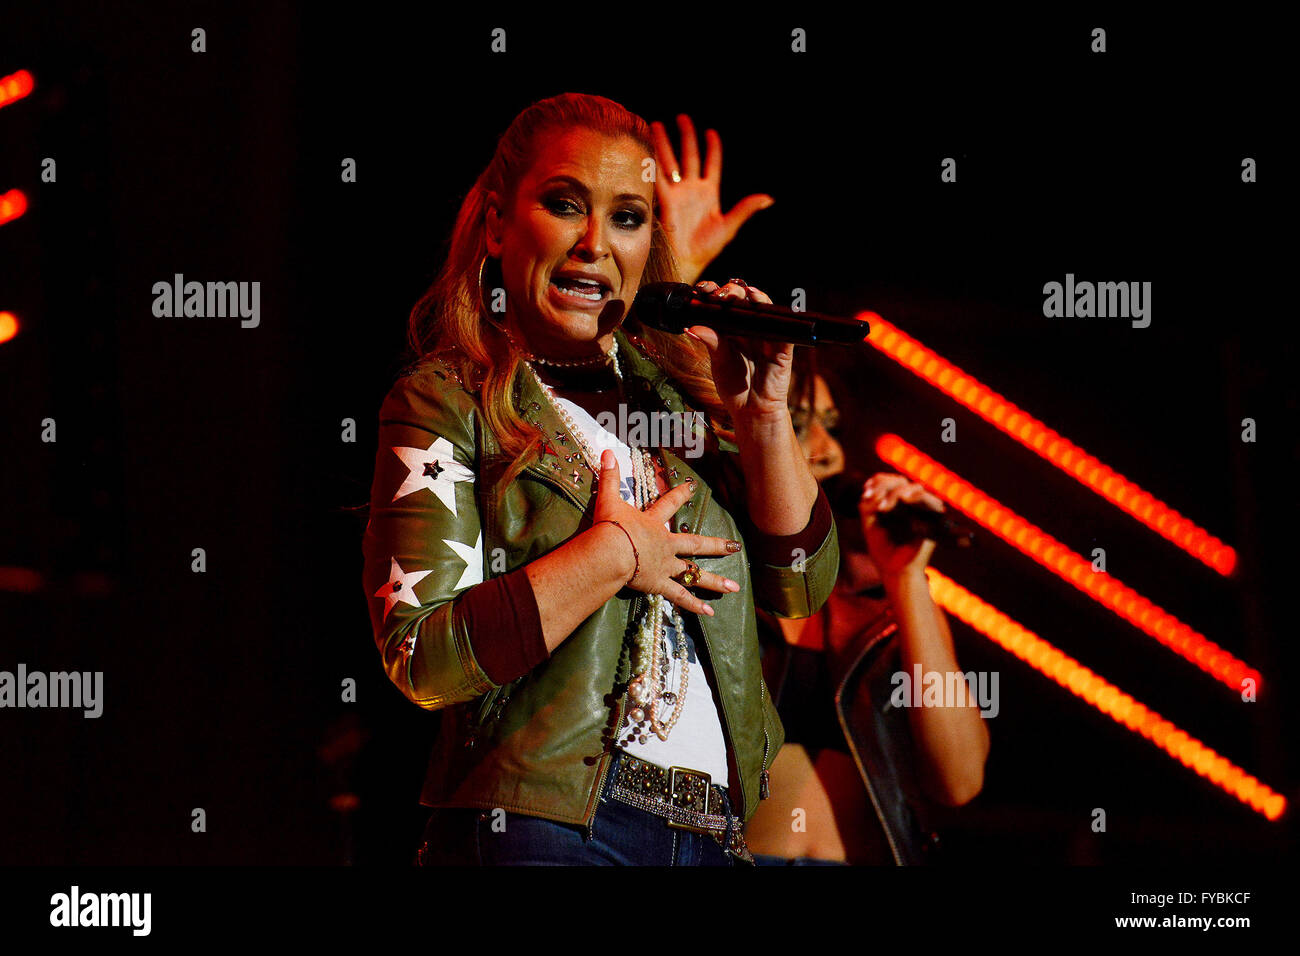 Anastacia live on stage on 18Apr2016 at Meistersingerhalle, Nuremburg, Bavaria, Germany The image shows U.S. singer and songwriter Anastacia, full name is Anastacia Lyn Newkirk. Stock Photo